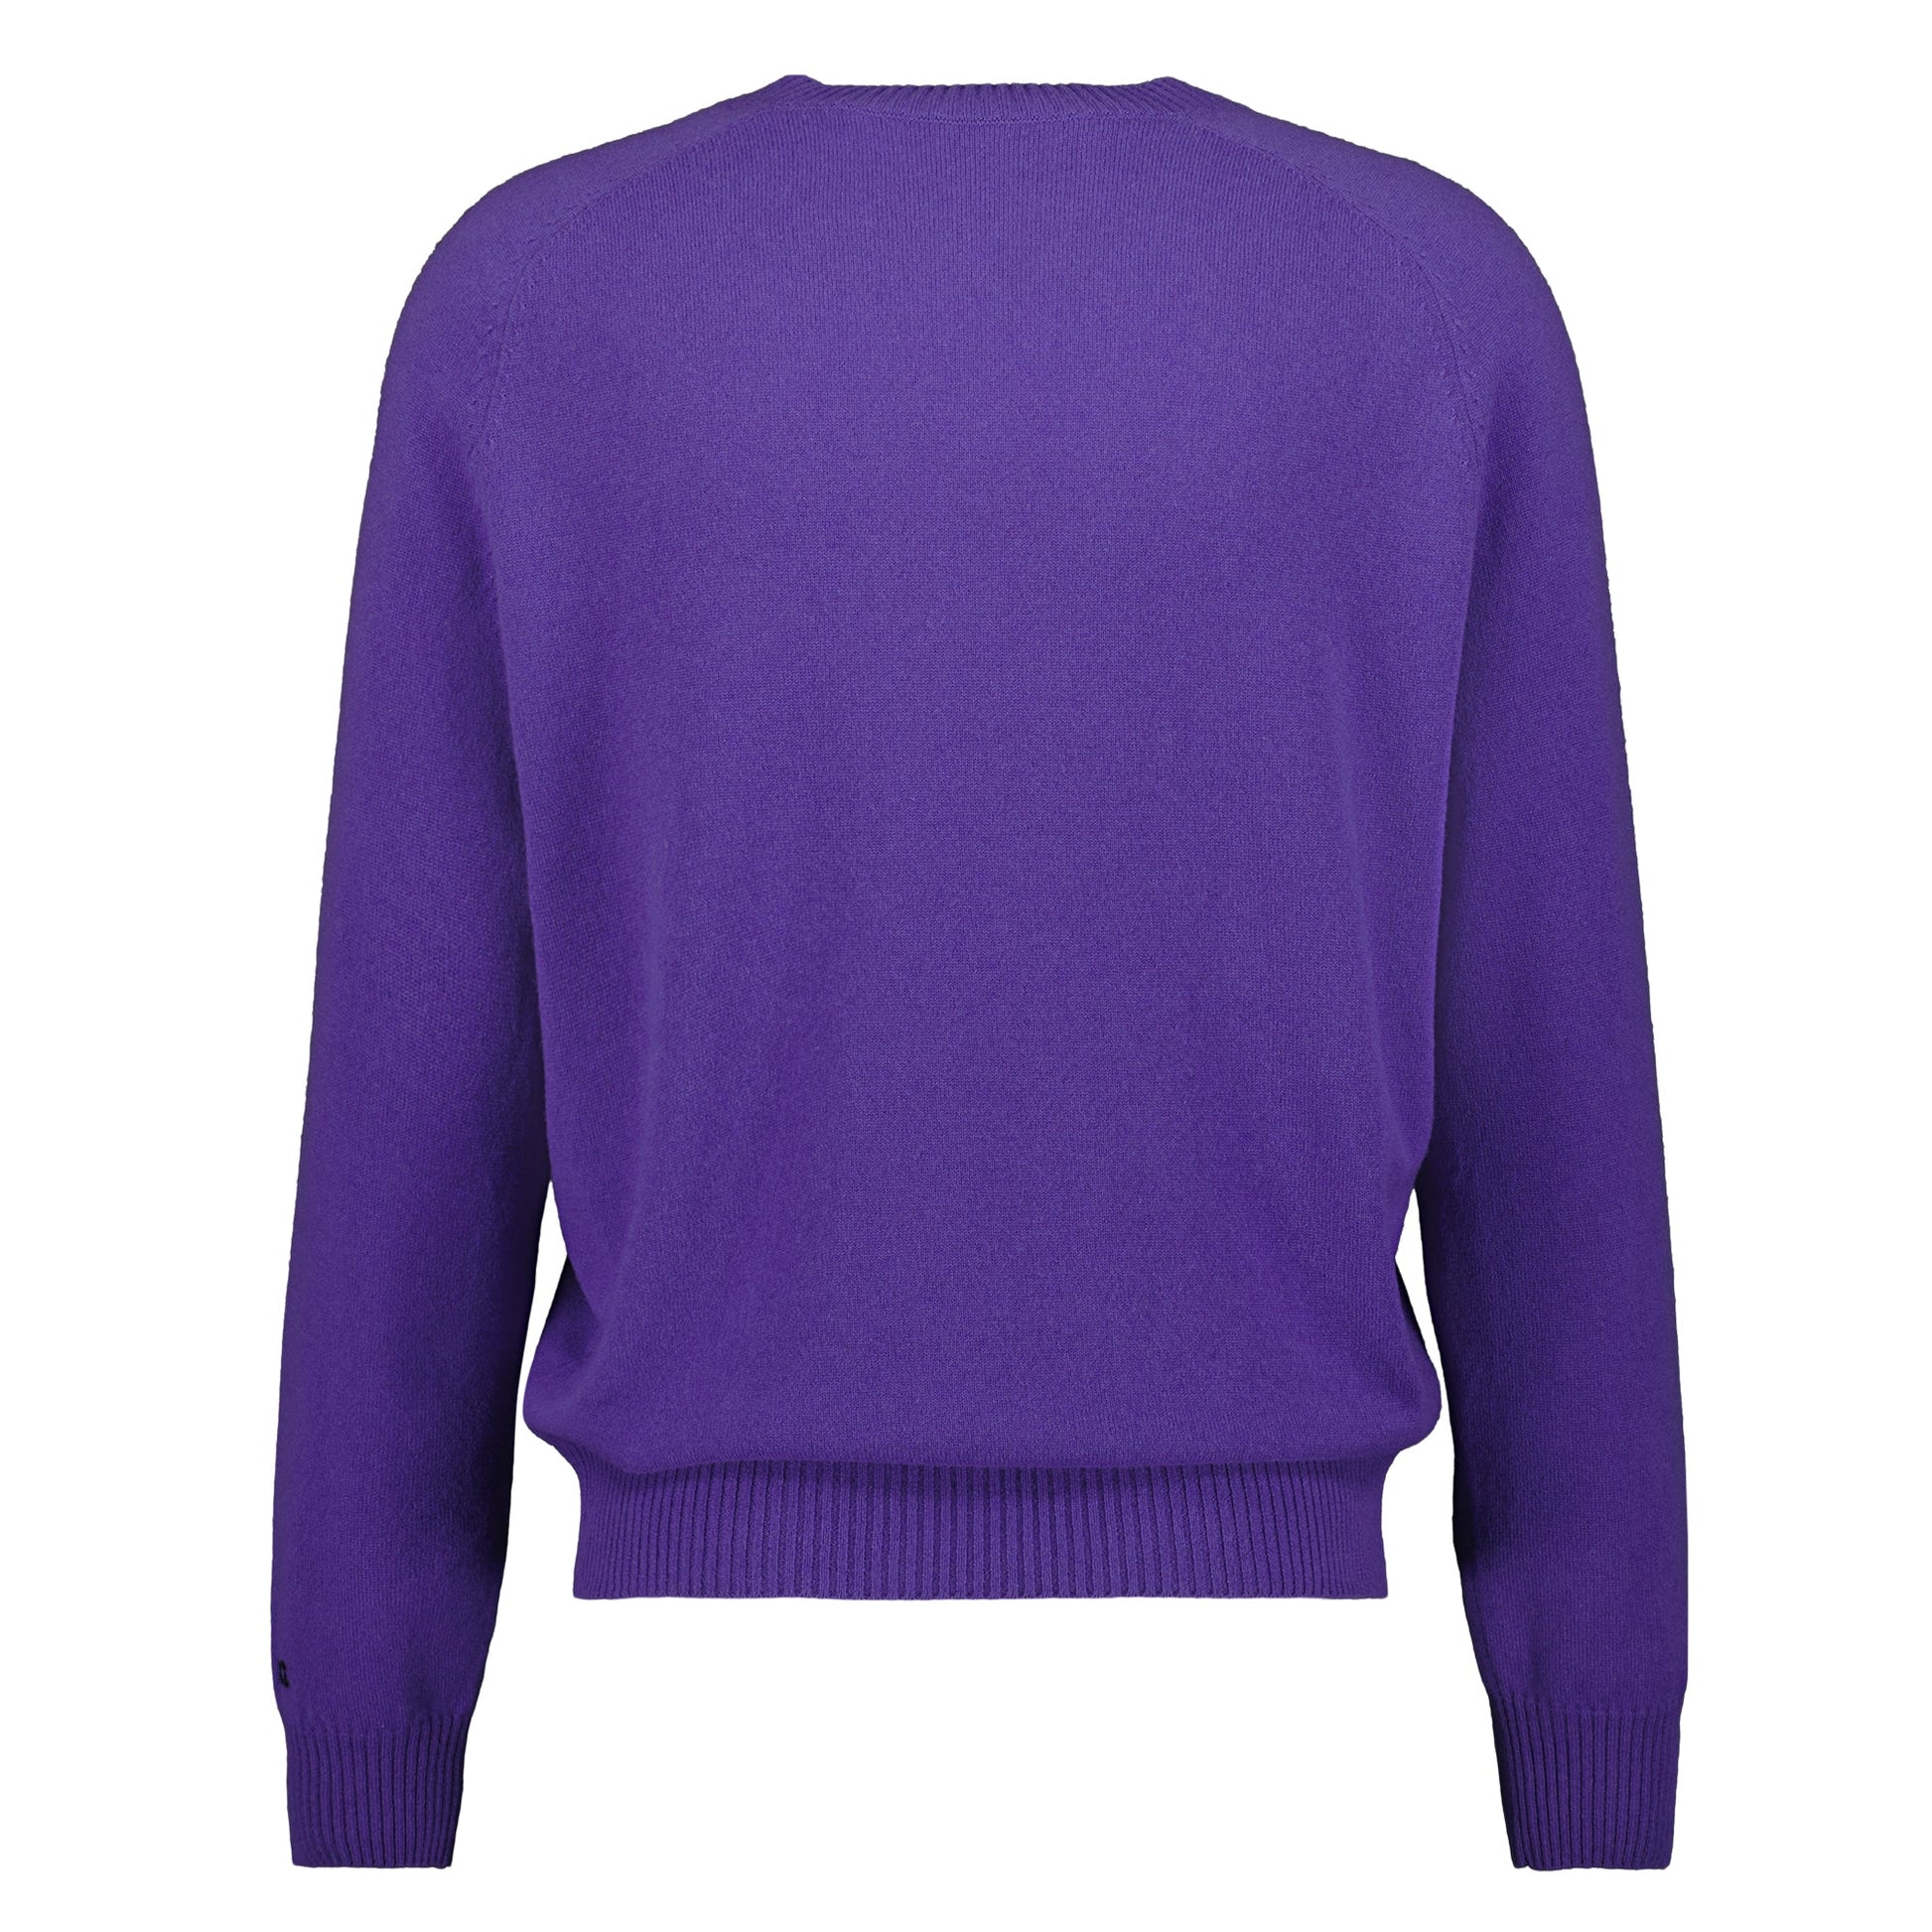 Jack Crew – Meta Bright Neck Campania Purple Sweater Collective Cashmere